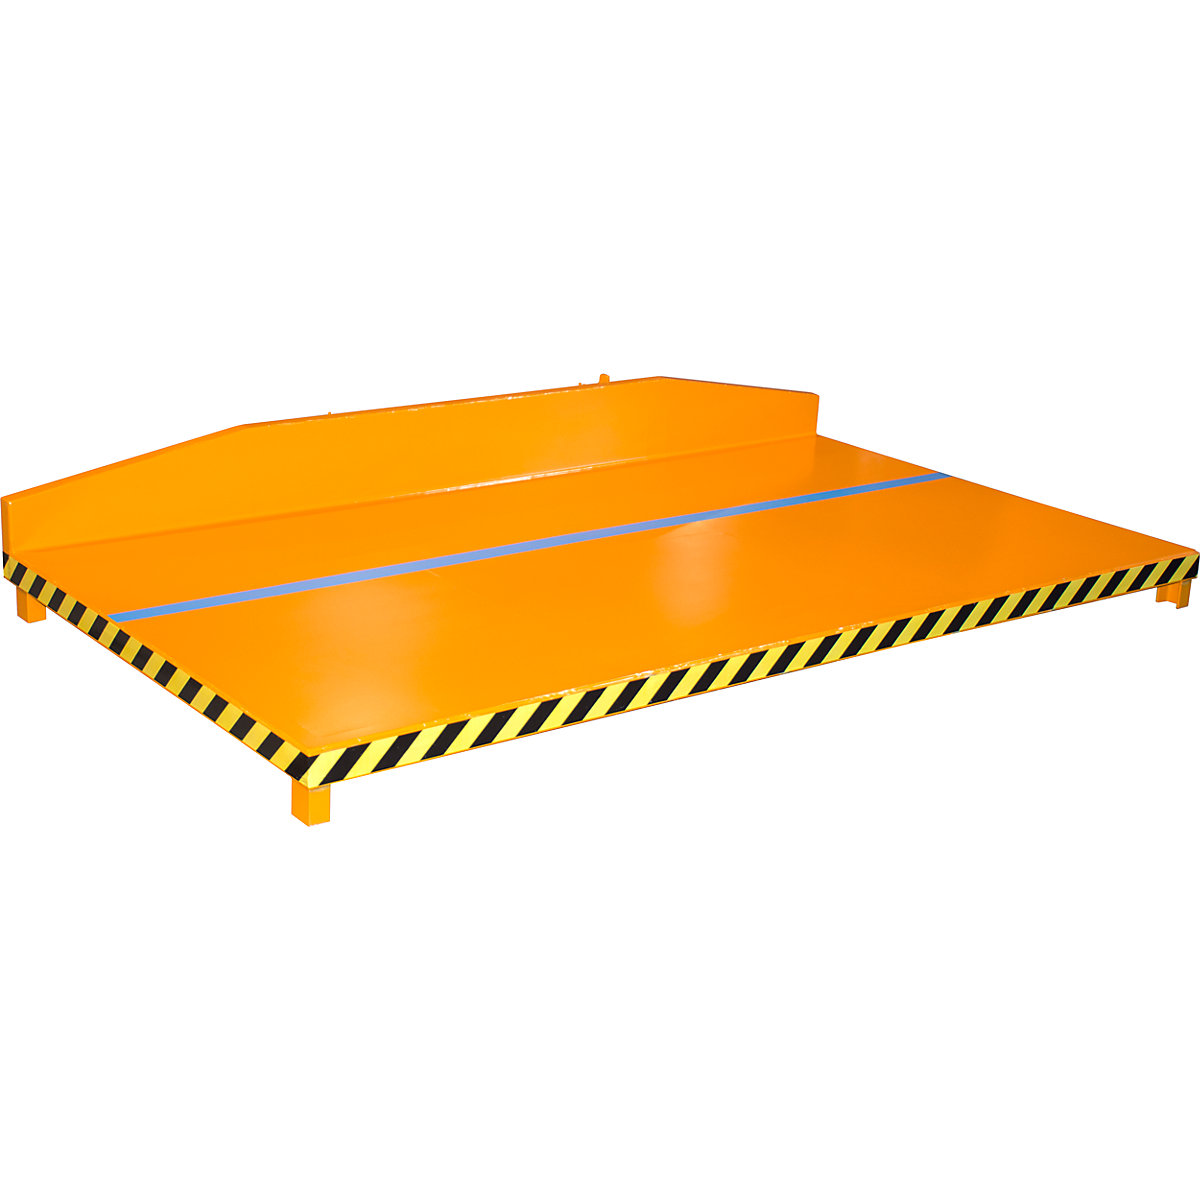 RGP platform for scrap – eurokraft pro, LxWxH 1540 x 2500 x 375 mm, yellow orange